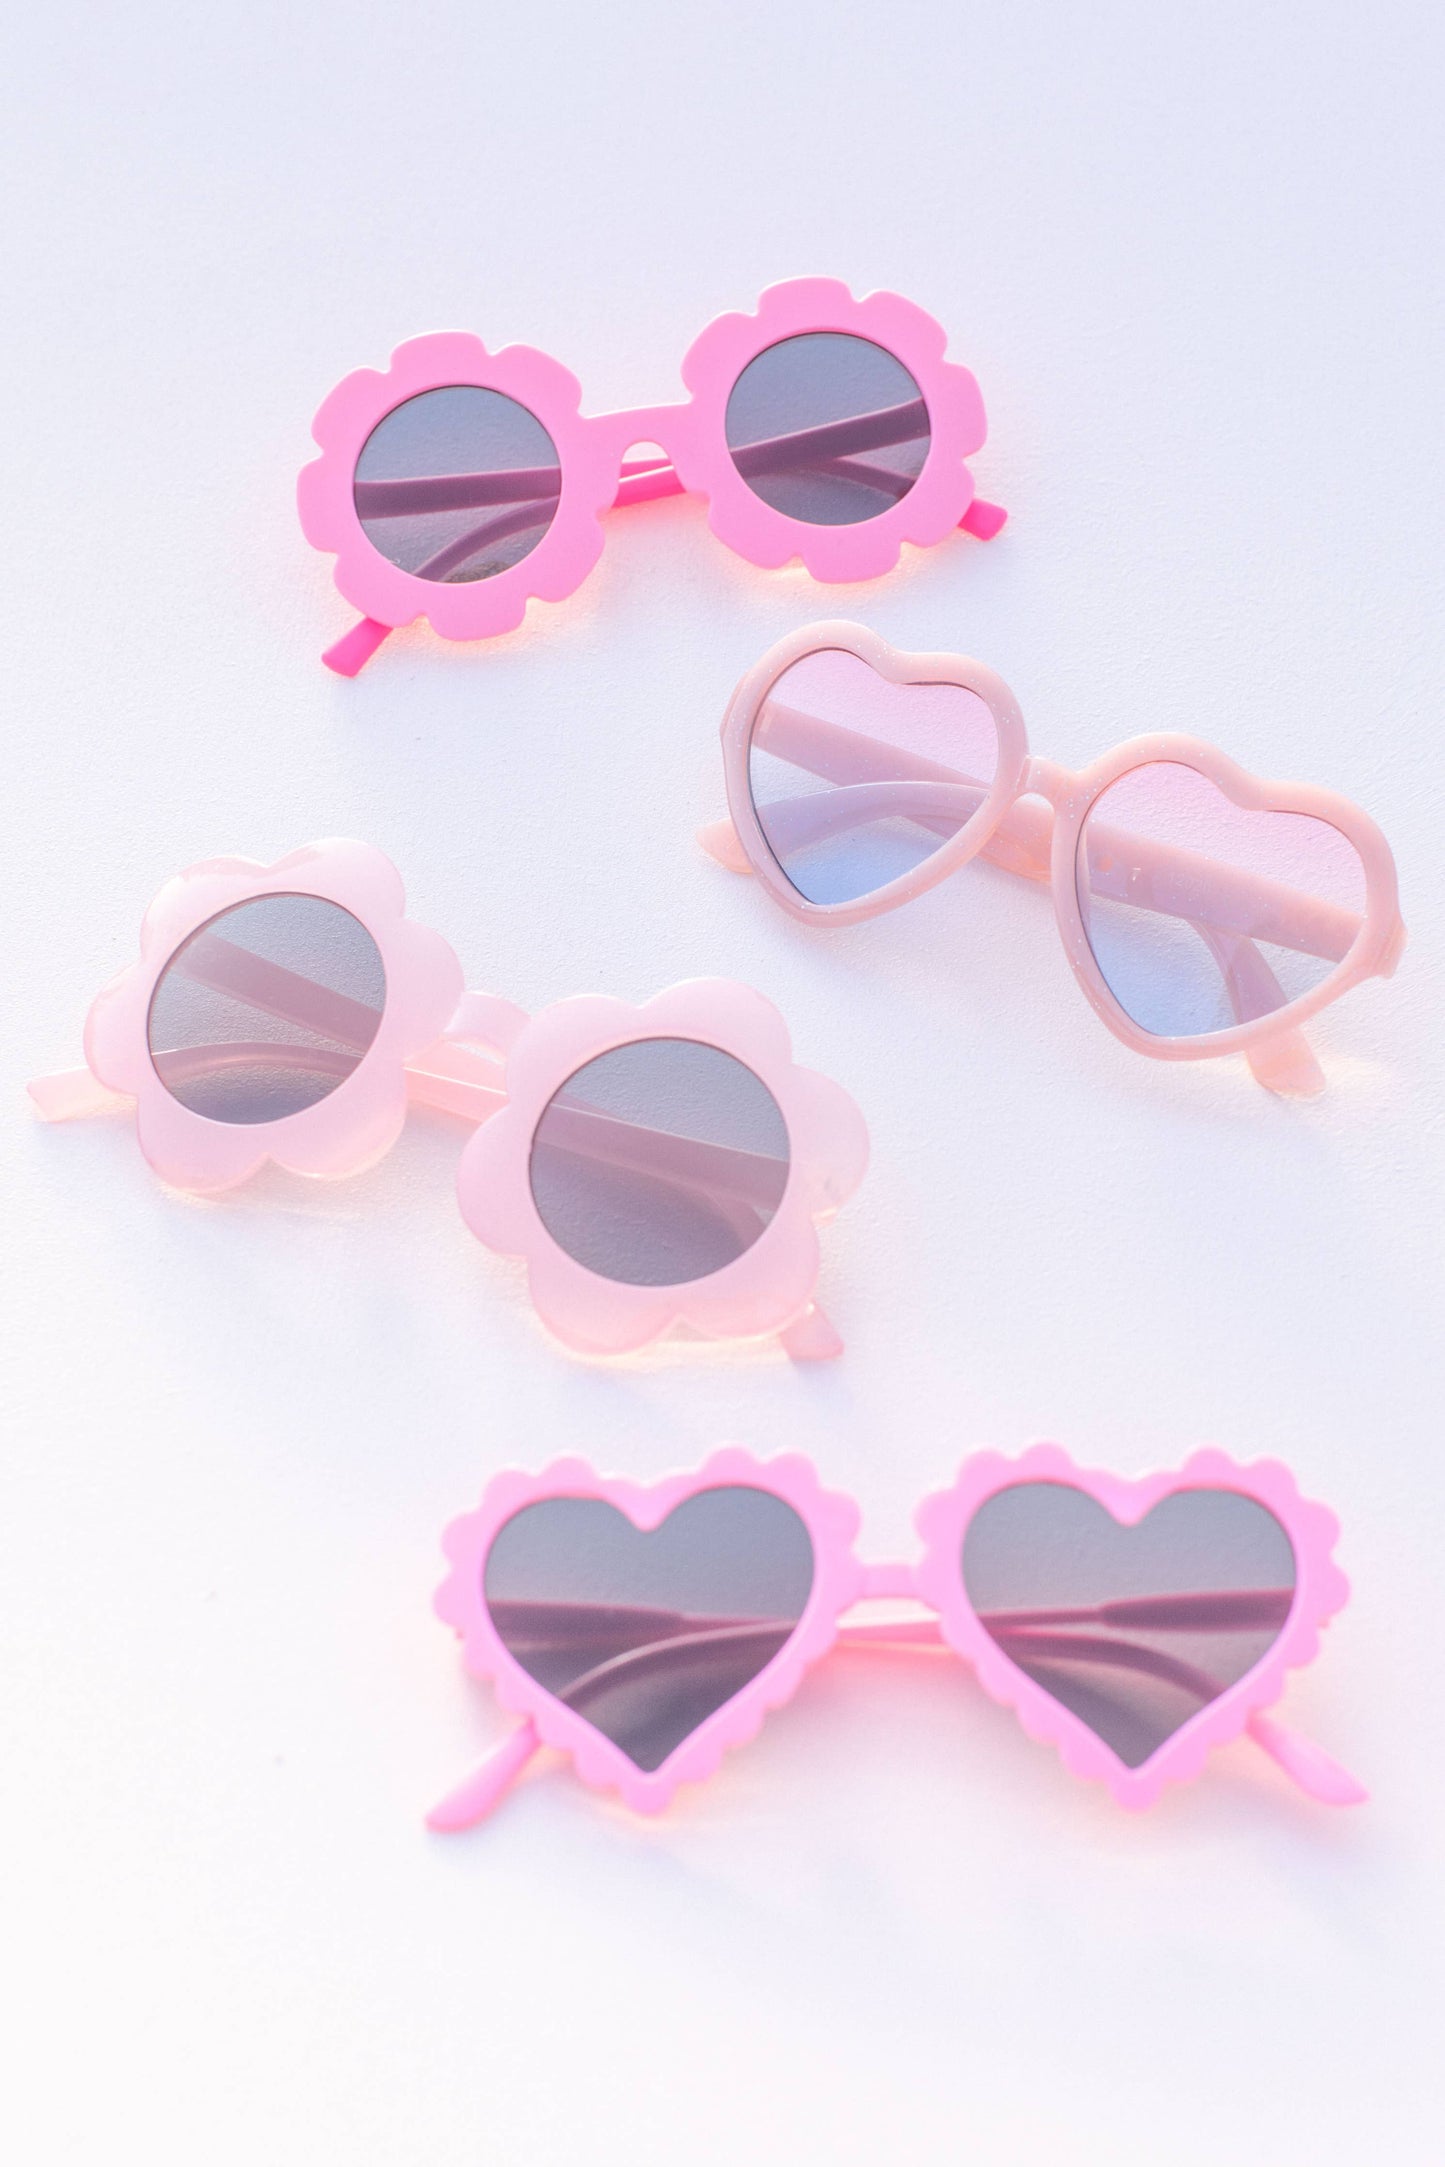 Valentine’s Pink Style Kids Sunglasses: Pink Scallop Heart